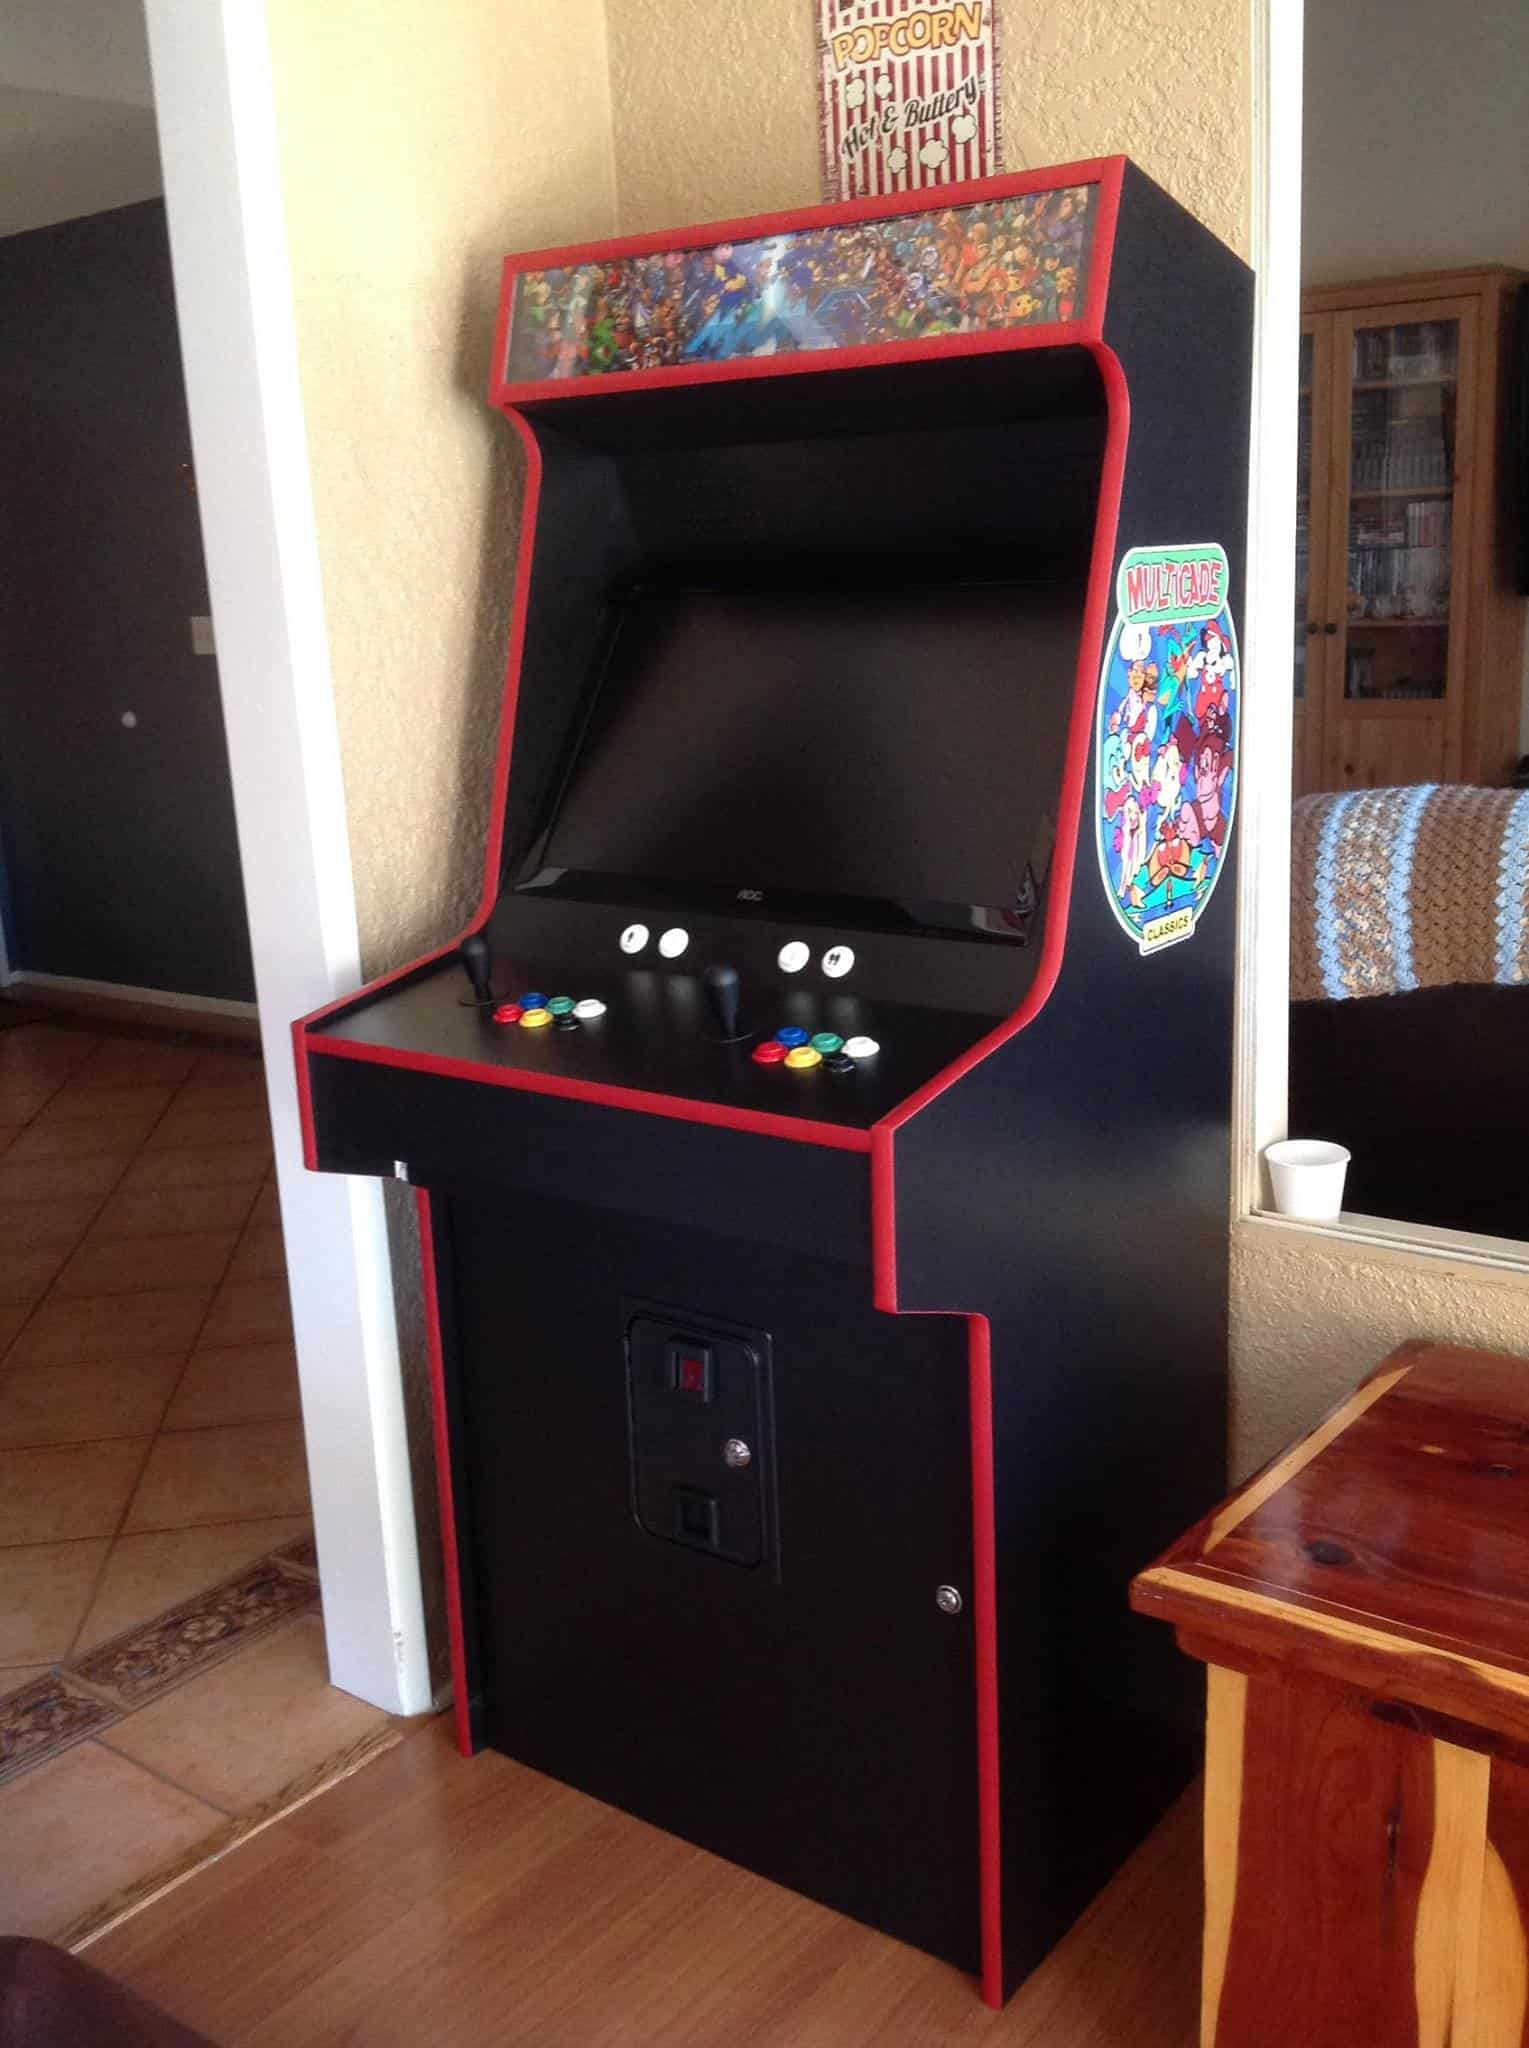 DIY Arcade Cabinet Plans
 Arcade Plans Build an Arcade Cabinet The Geek Pub